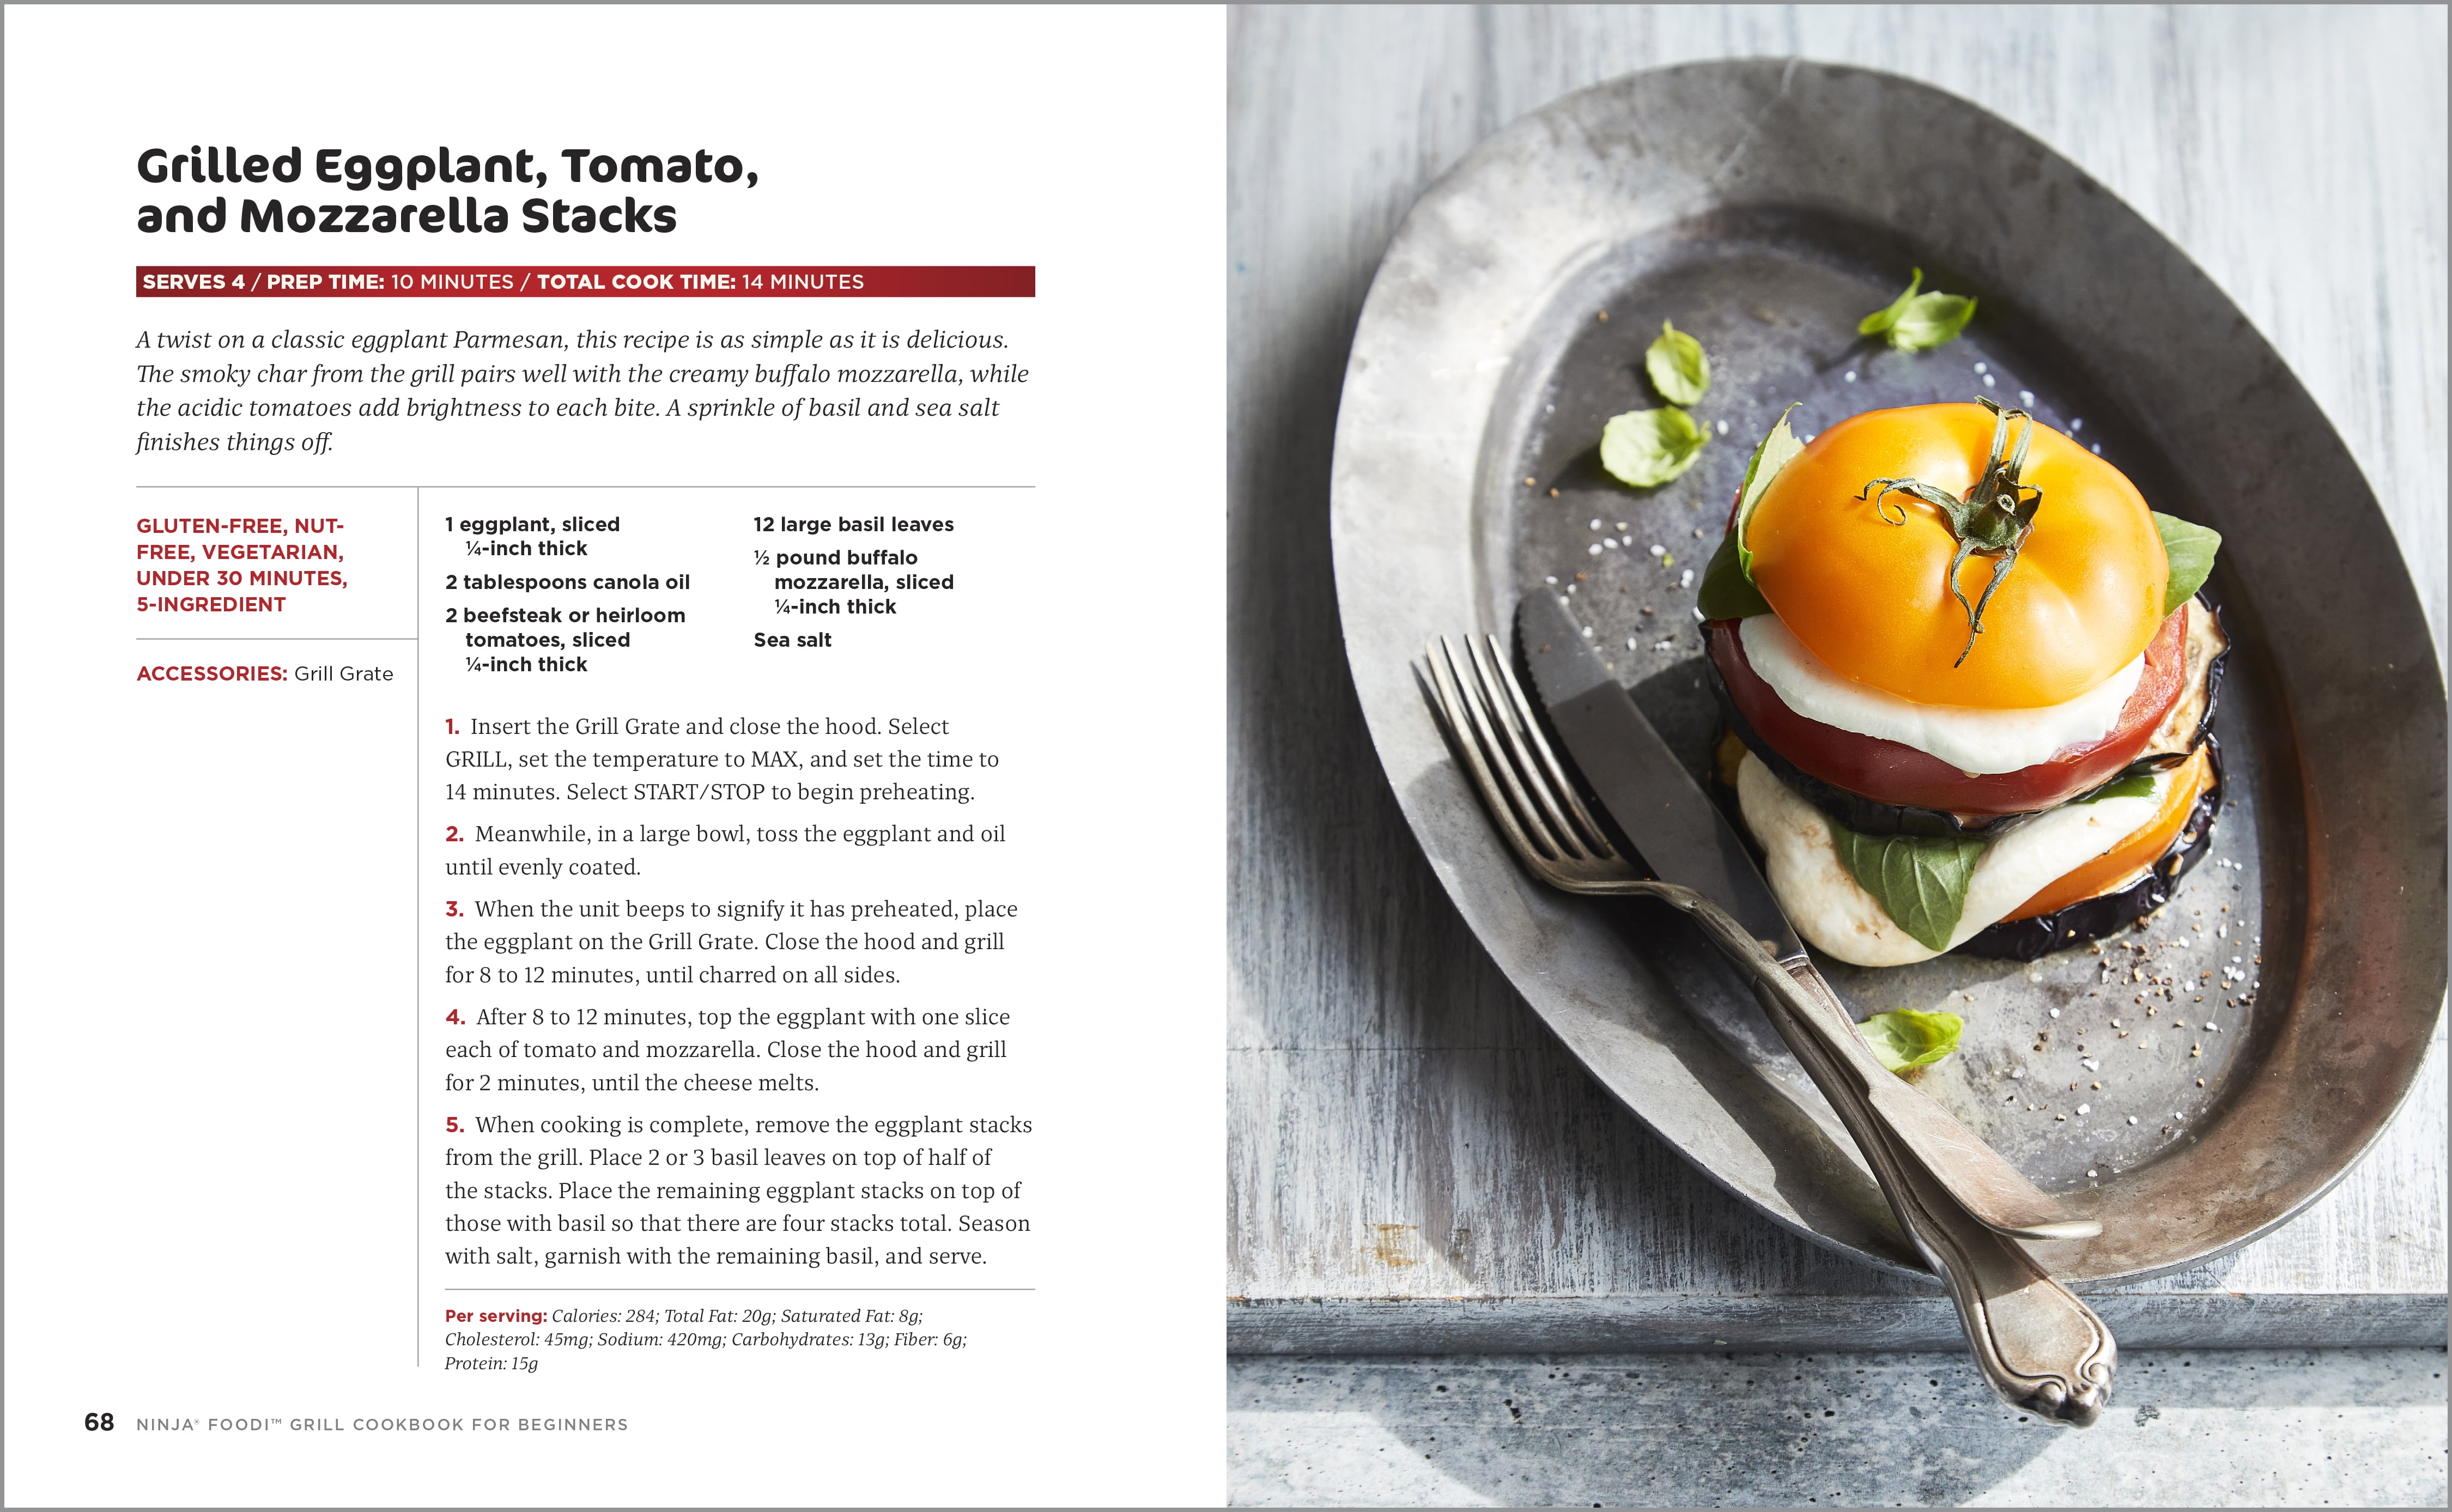 The Basic Ninja Foodi Smart XL Grill Cookbook: Traditional, Modern